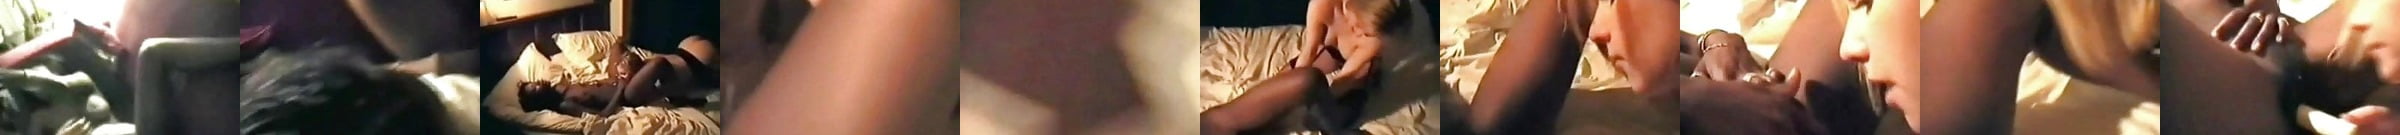 Keeley Hawes Topless Free Celebrity Big Boobs Porn Video 6b Xhamster